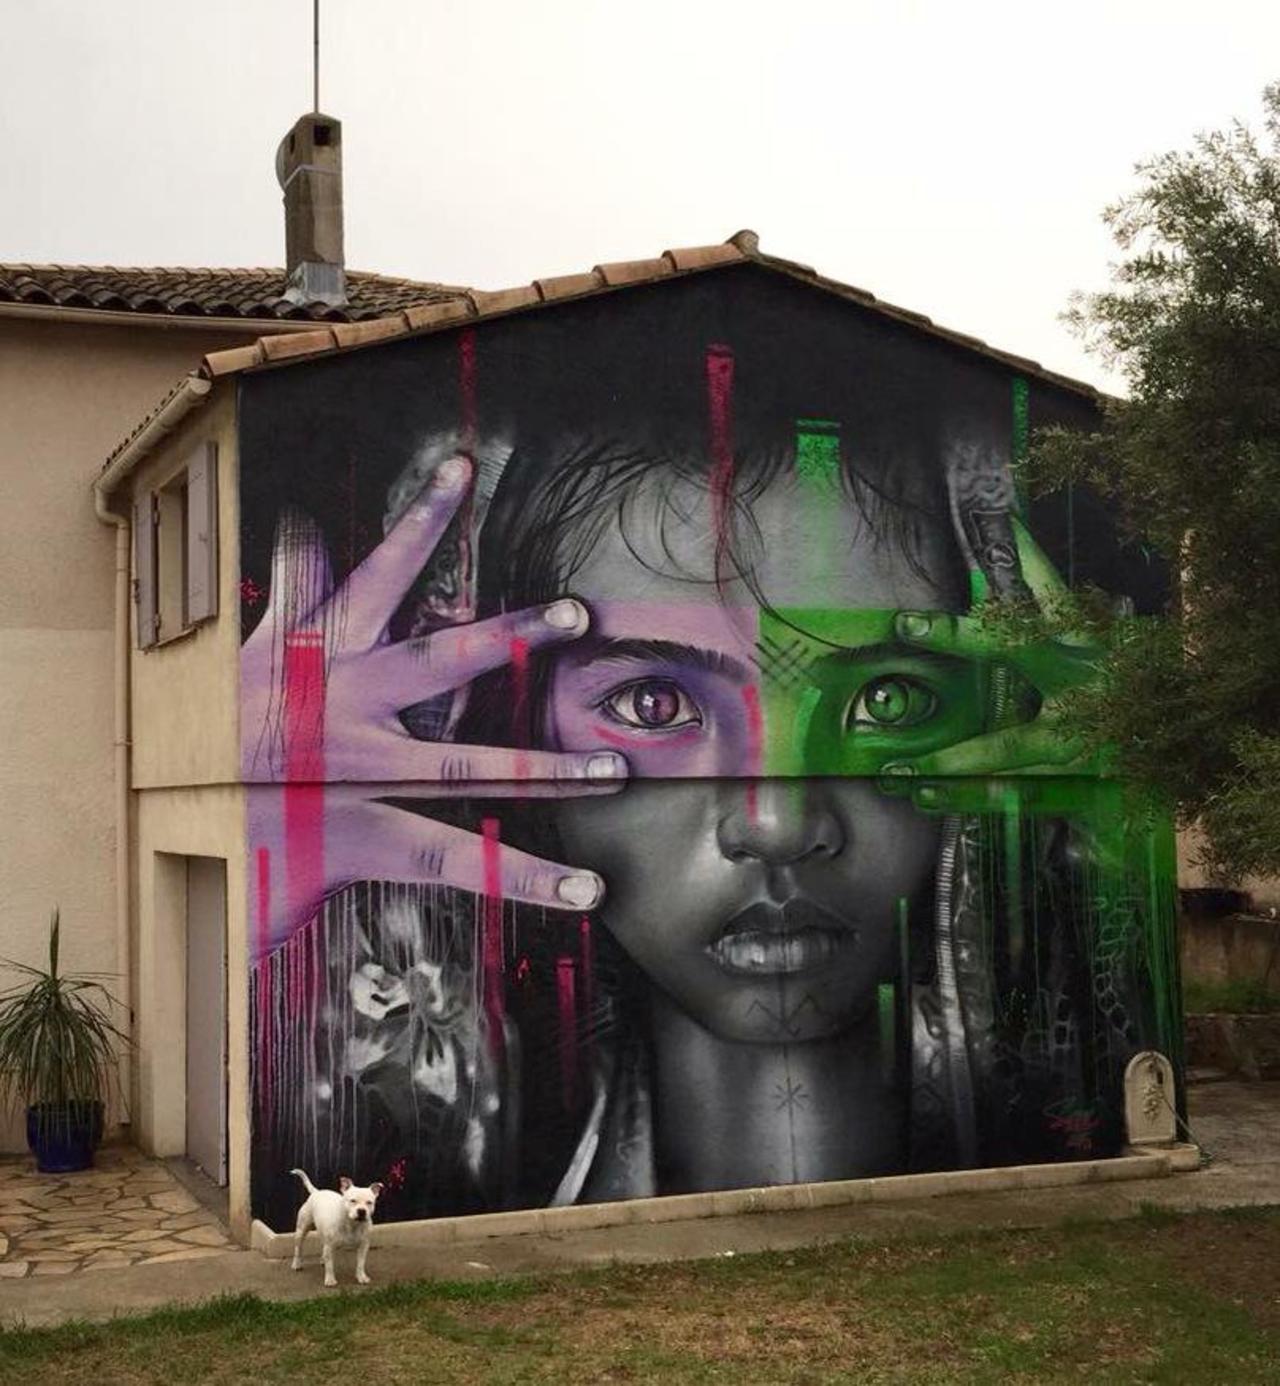 RT ArchaicManor "'Open your mind'
Street Art by Guillaume Dusotoit 

#art #arte #graffiti #streetart http://t.co/OZX0x7CYLG yo"